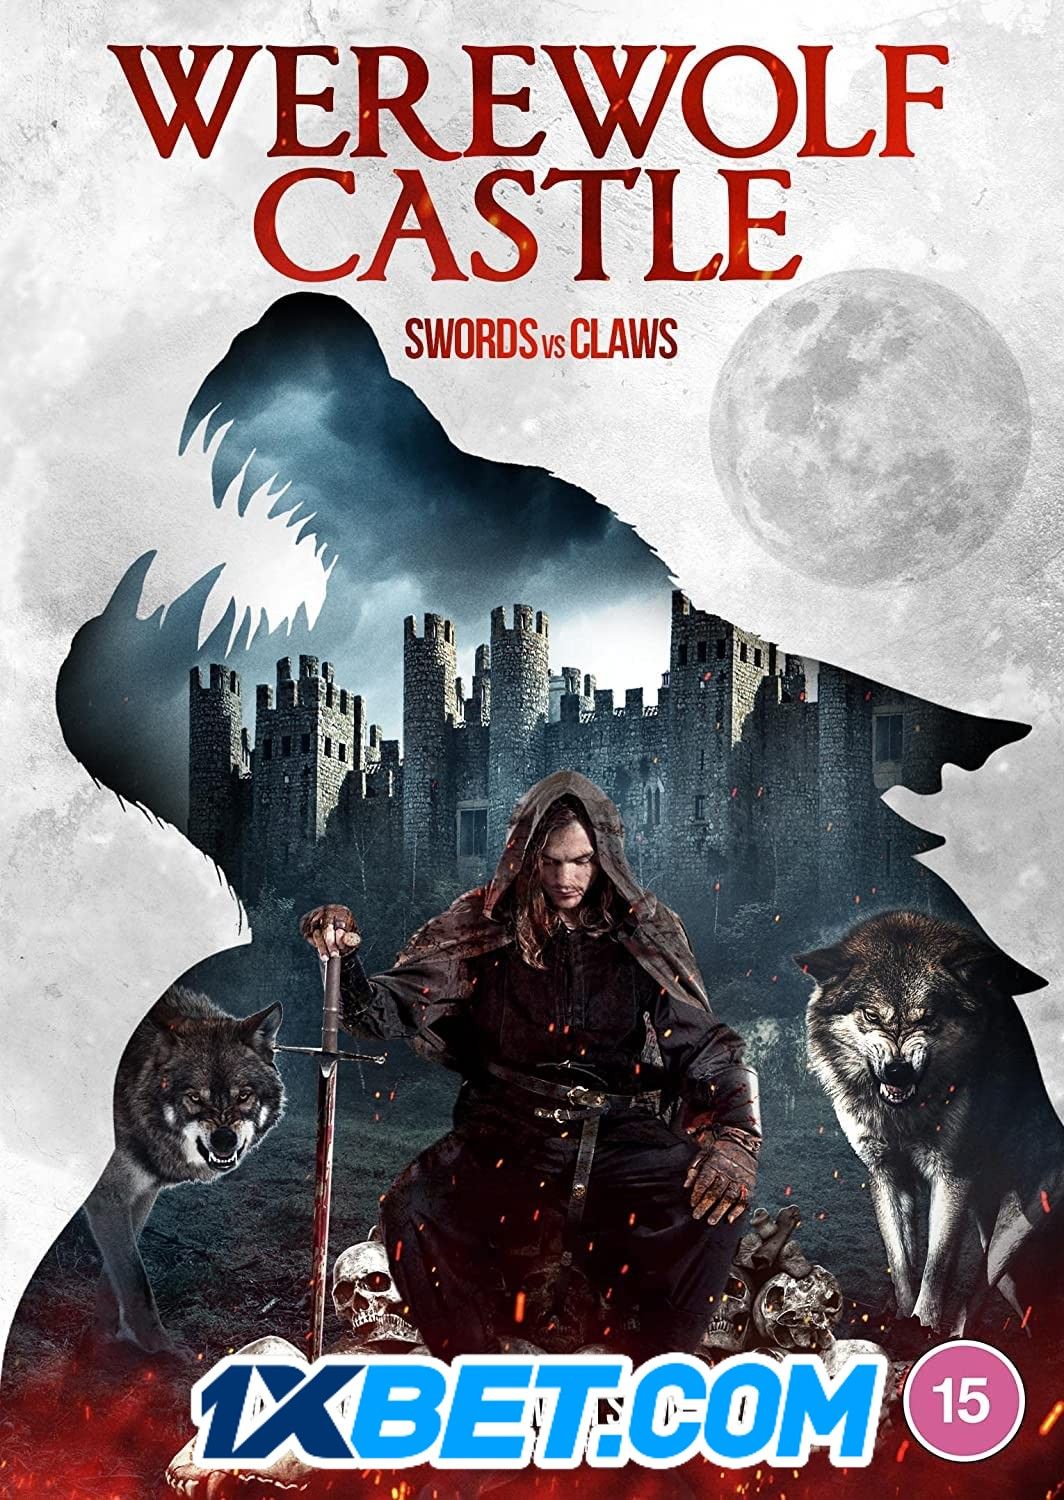 Werewolf Castle (2021) Tamil (Voice Over) Dubbed WEBRip download full movie